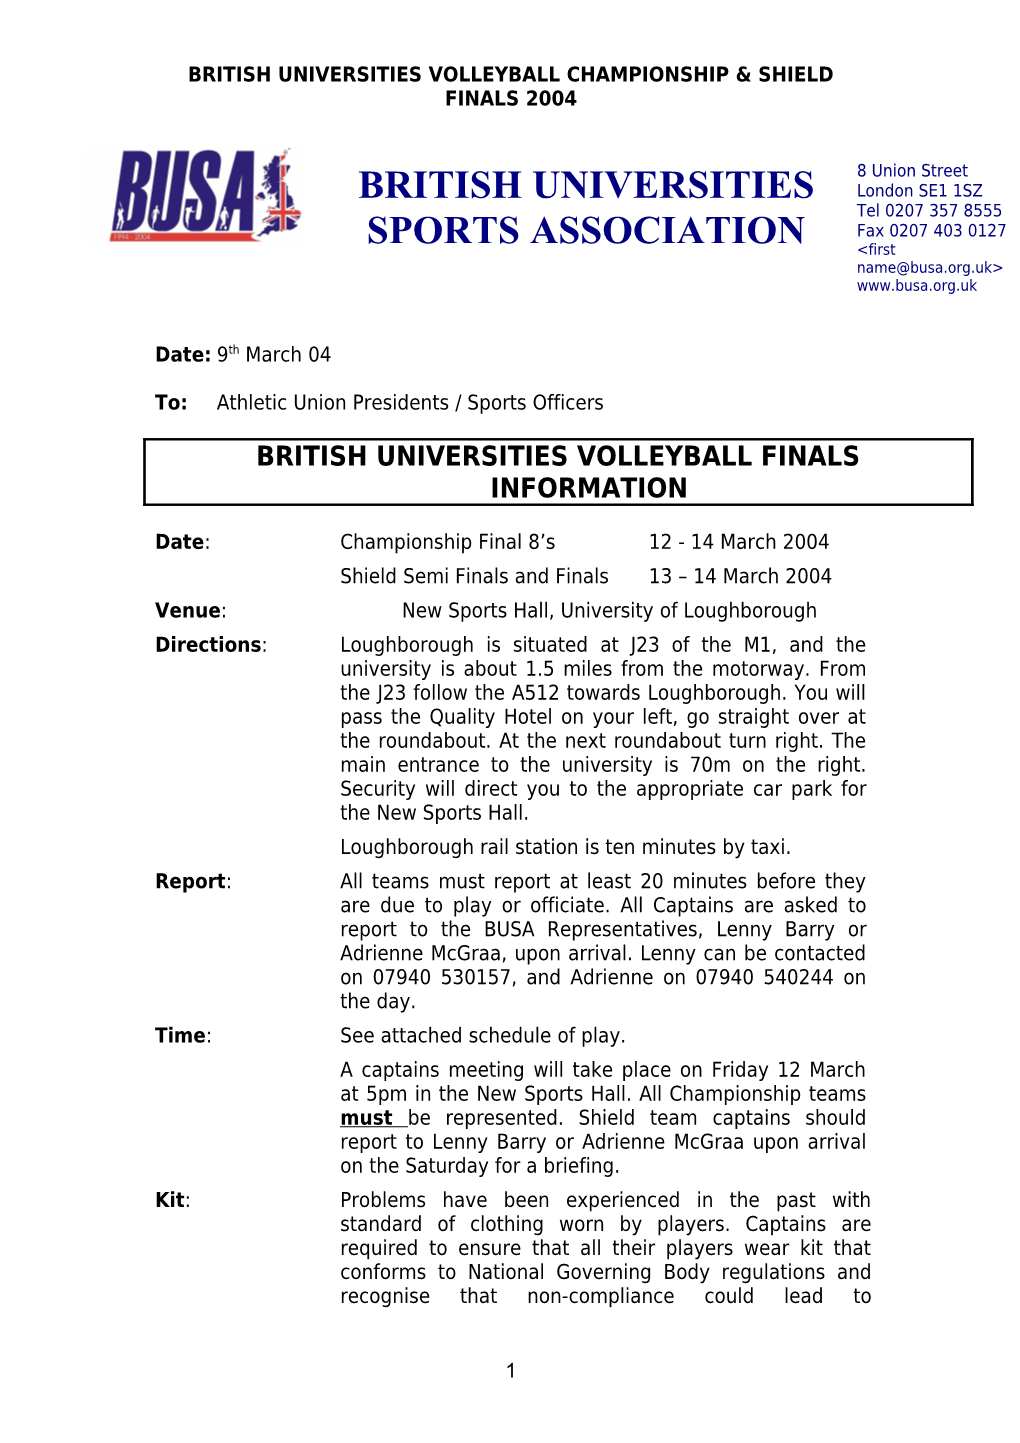 British Universities Volleyball Championship & Shield Finals 2004